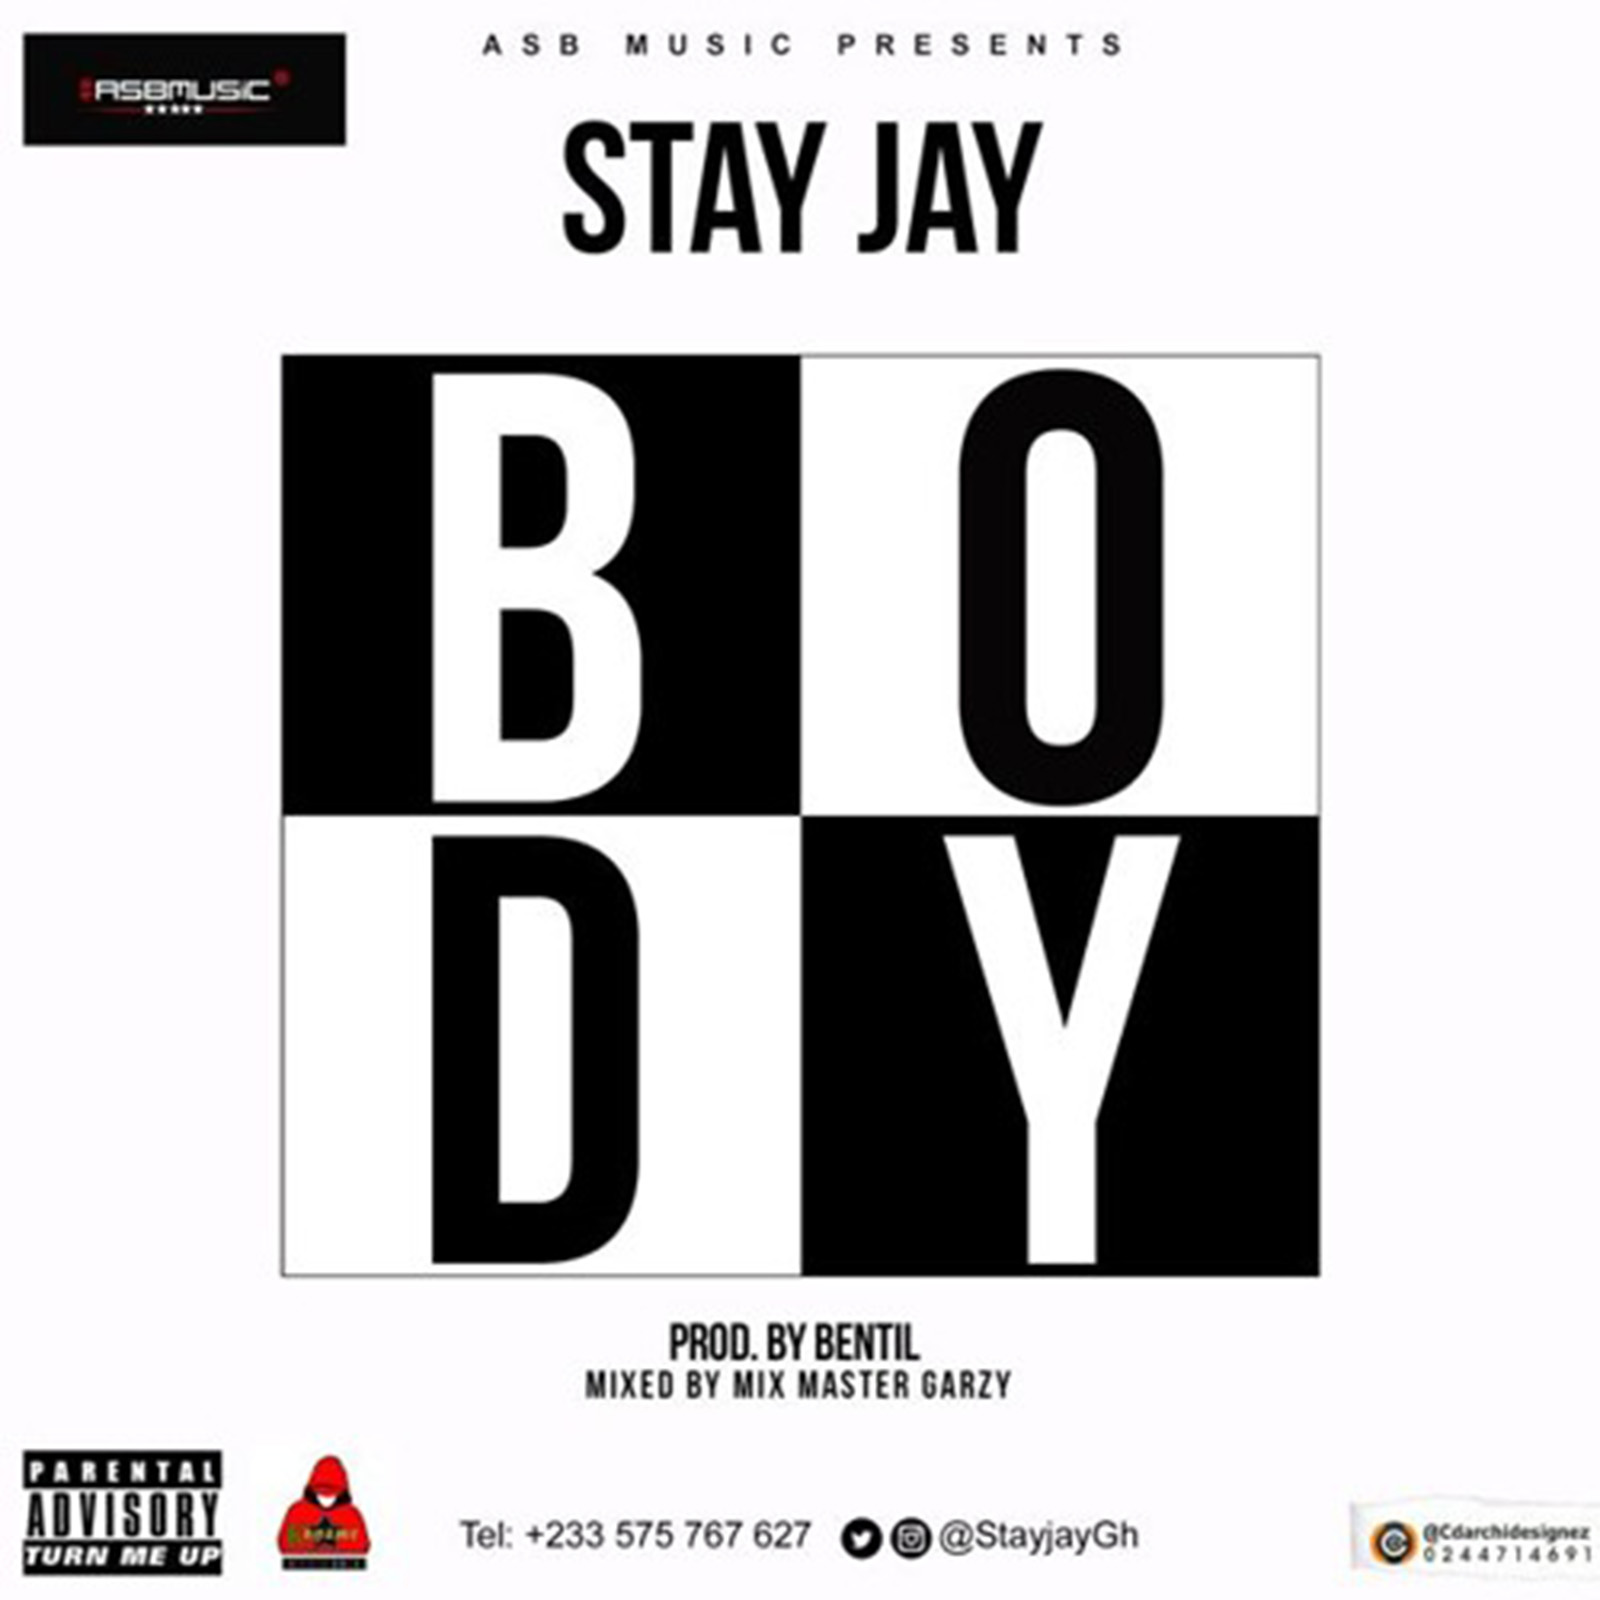 Body by Stay Jay